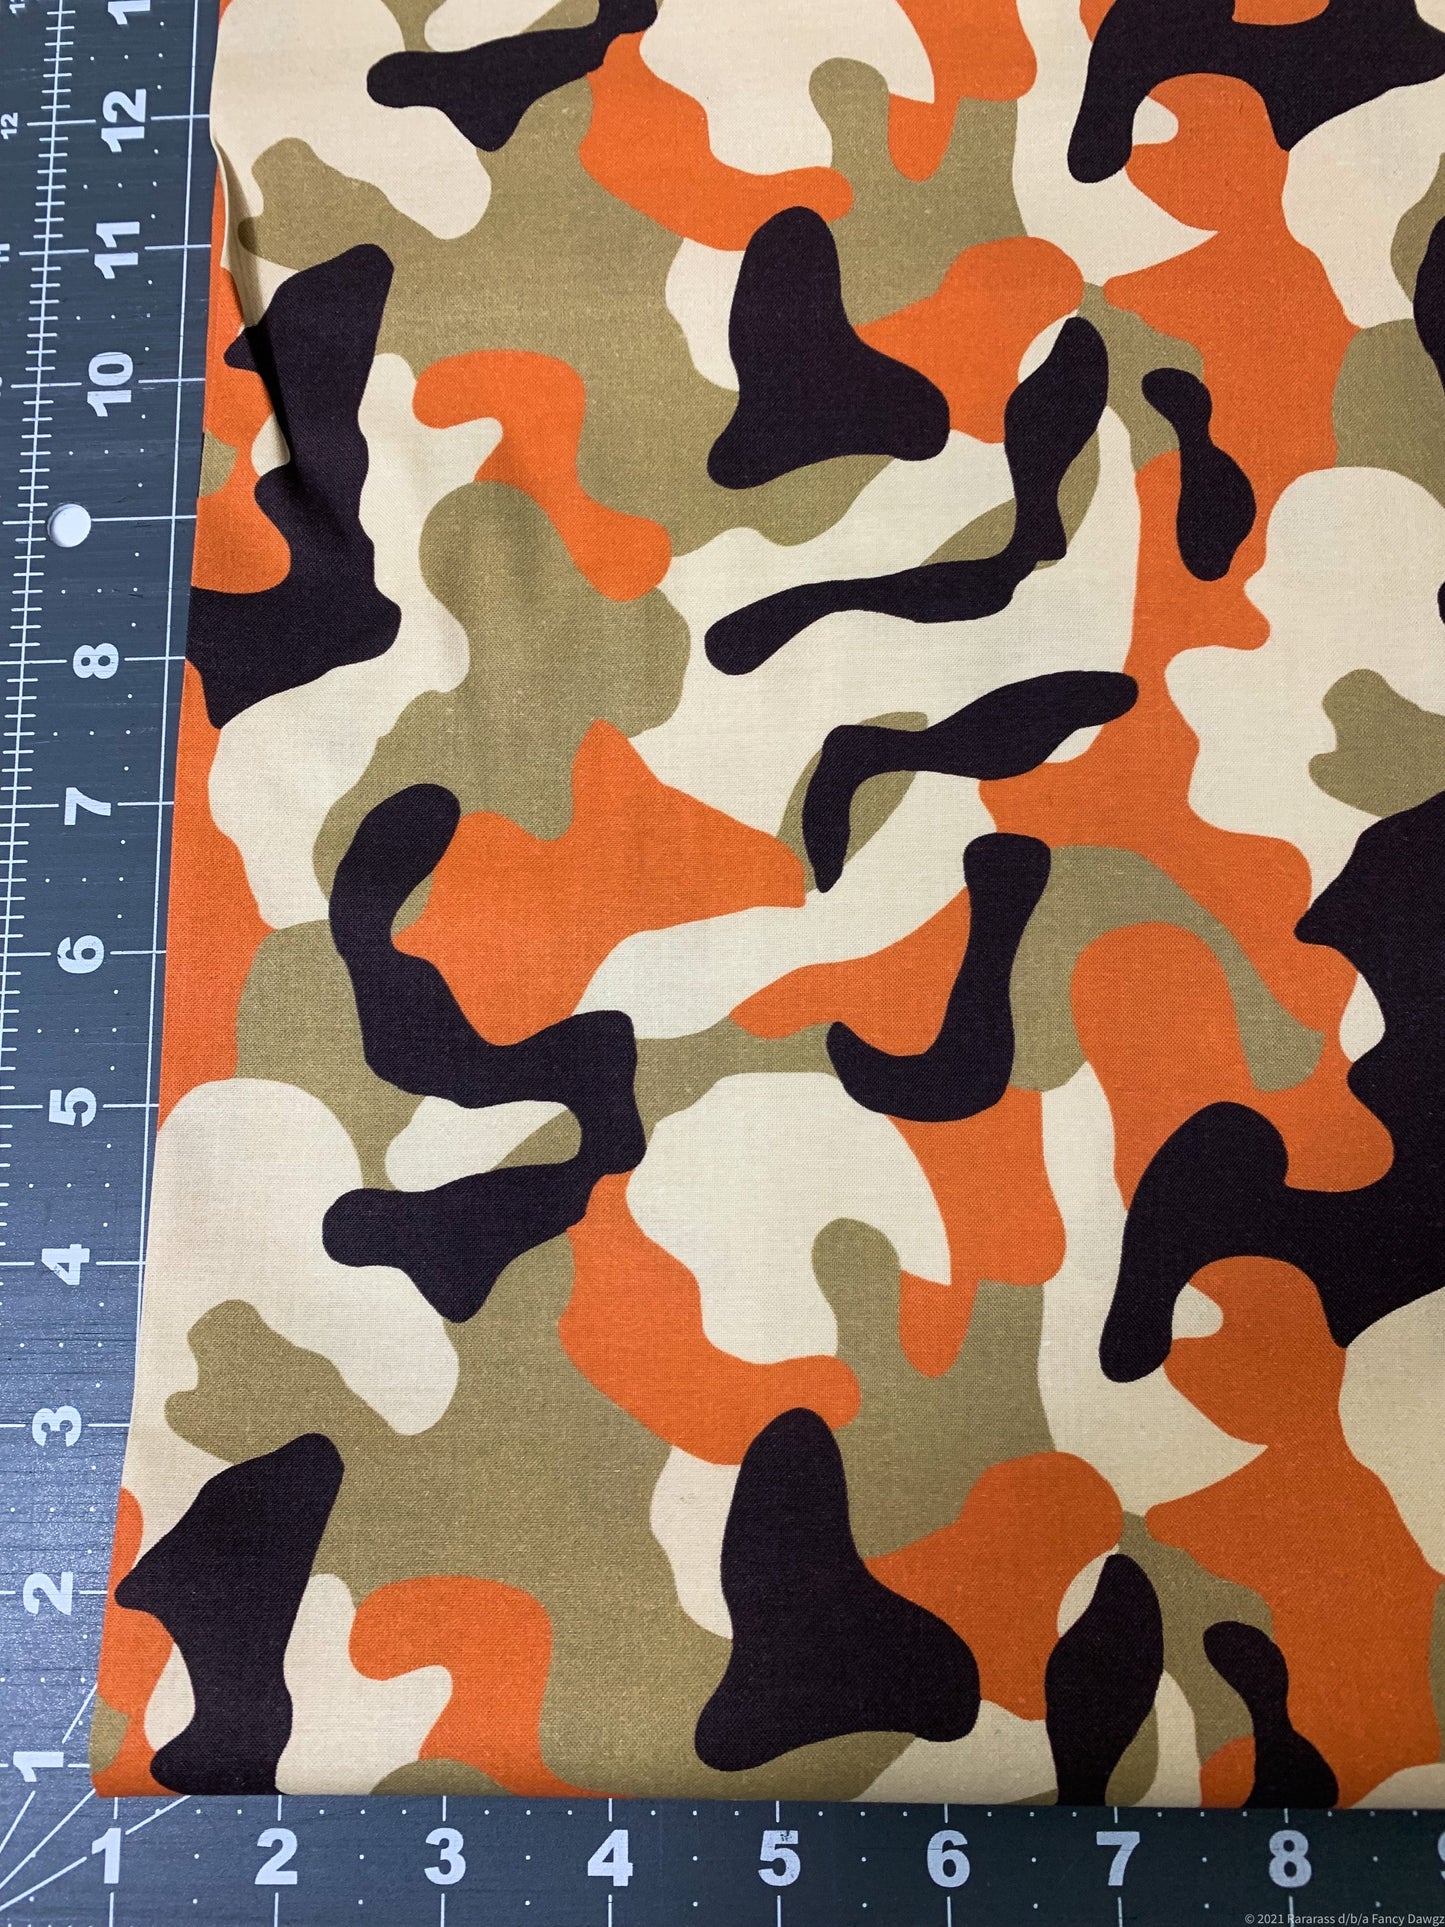 Orange Desert Camouflage fabric10861 Defender of Freedom Camo